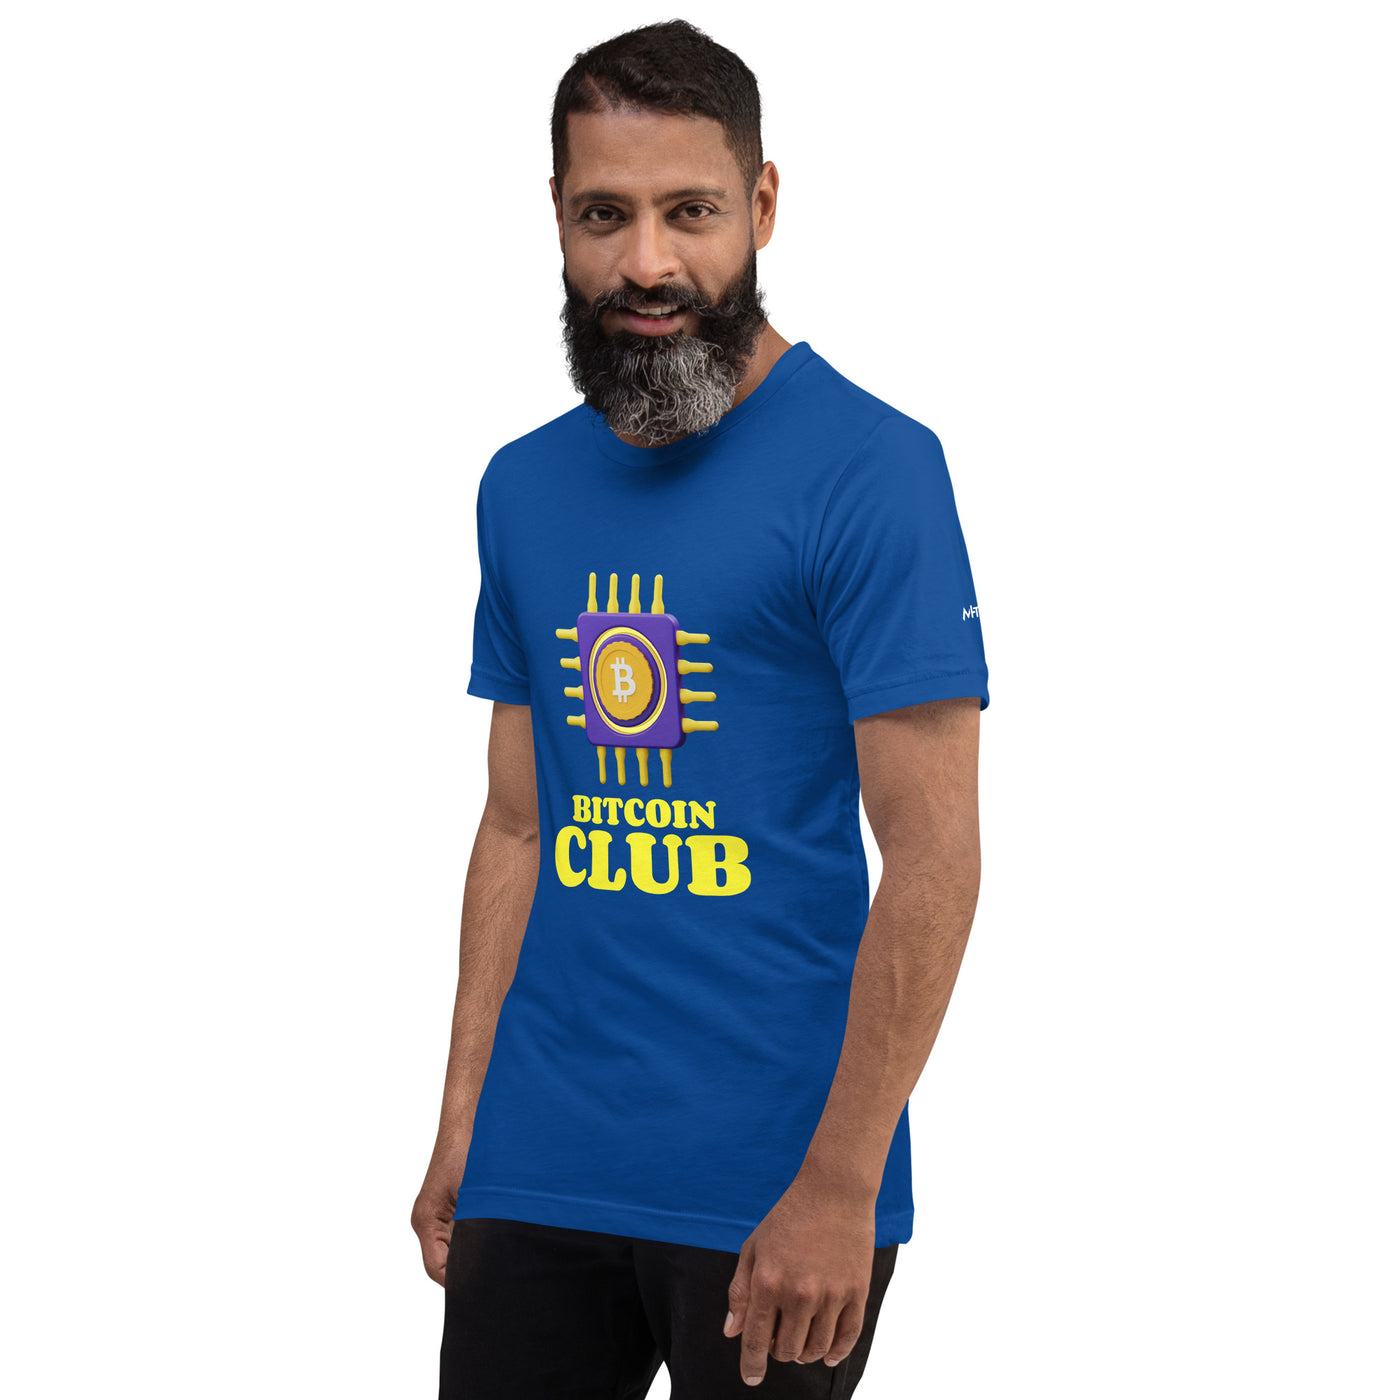 BITCOIN CLUB V2 - Unisex t-shirt